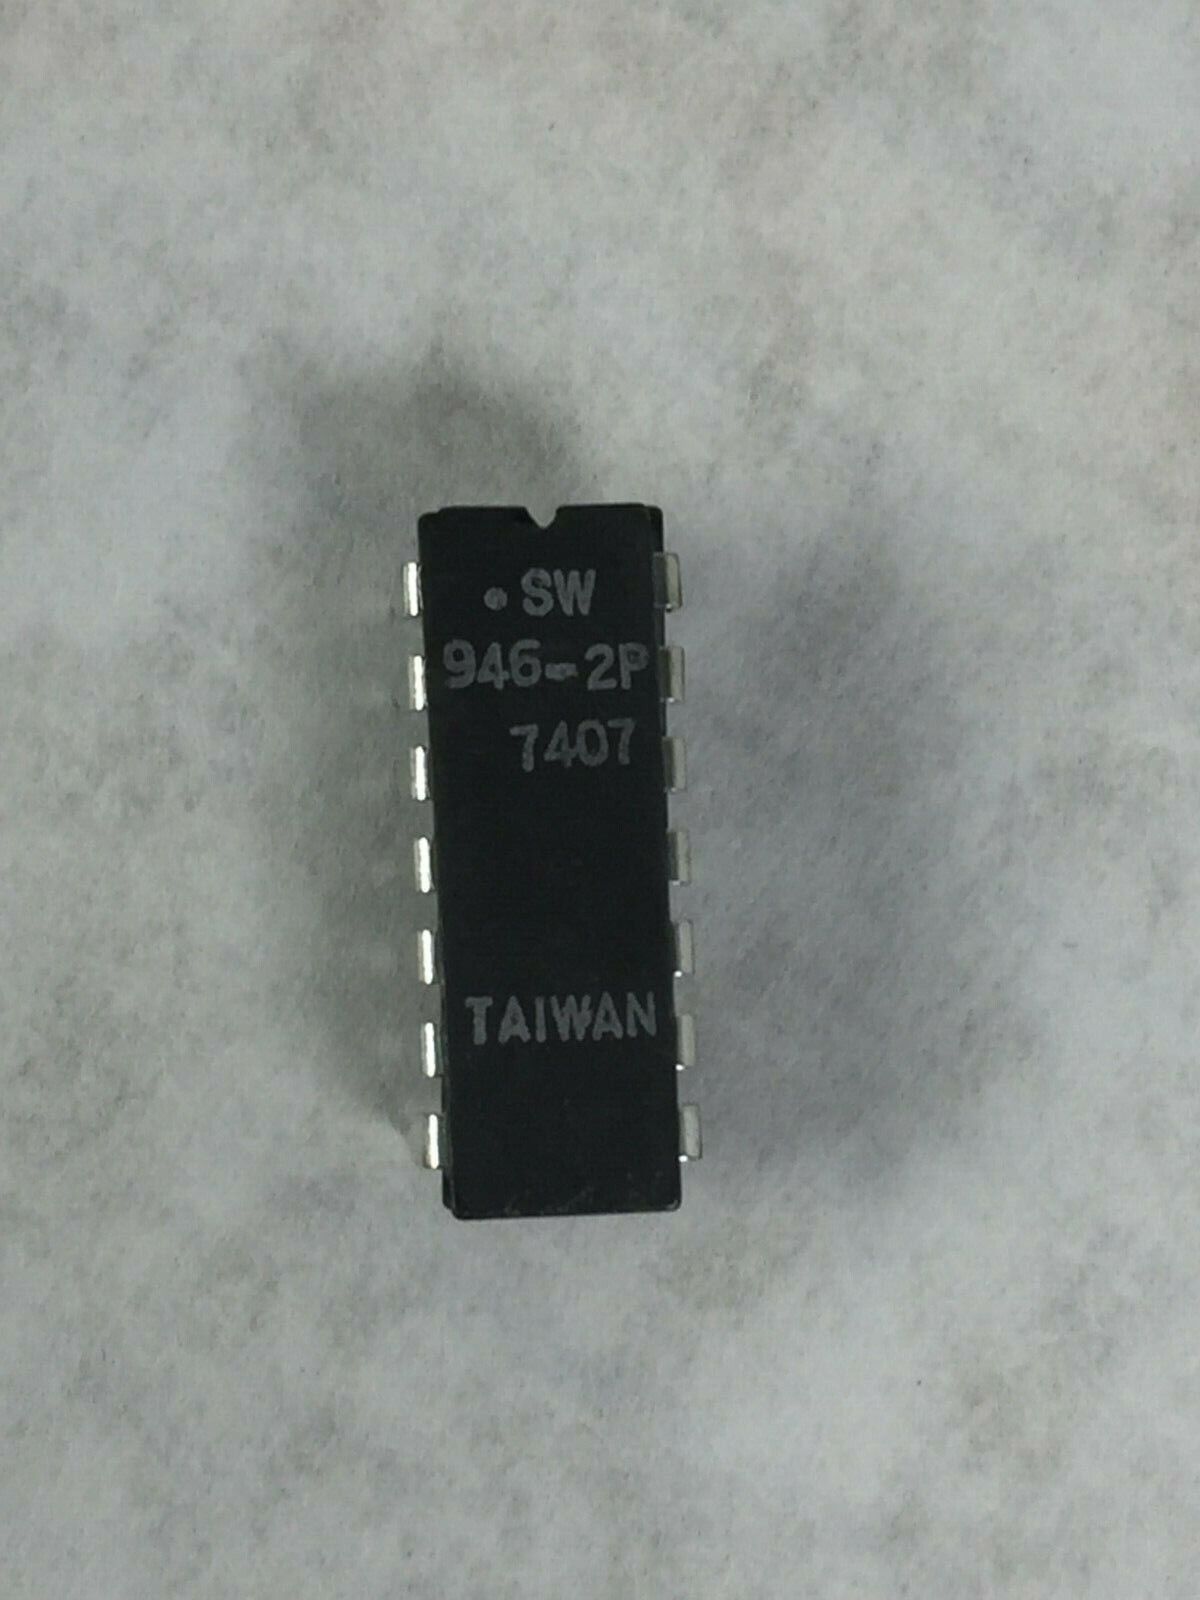 SW 946-2P Stewart Warner  14 Pin  Lot of 24